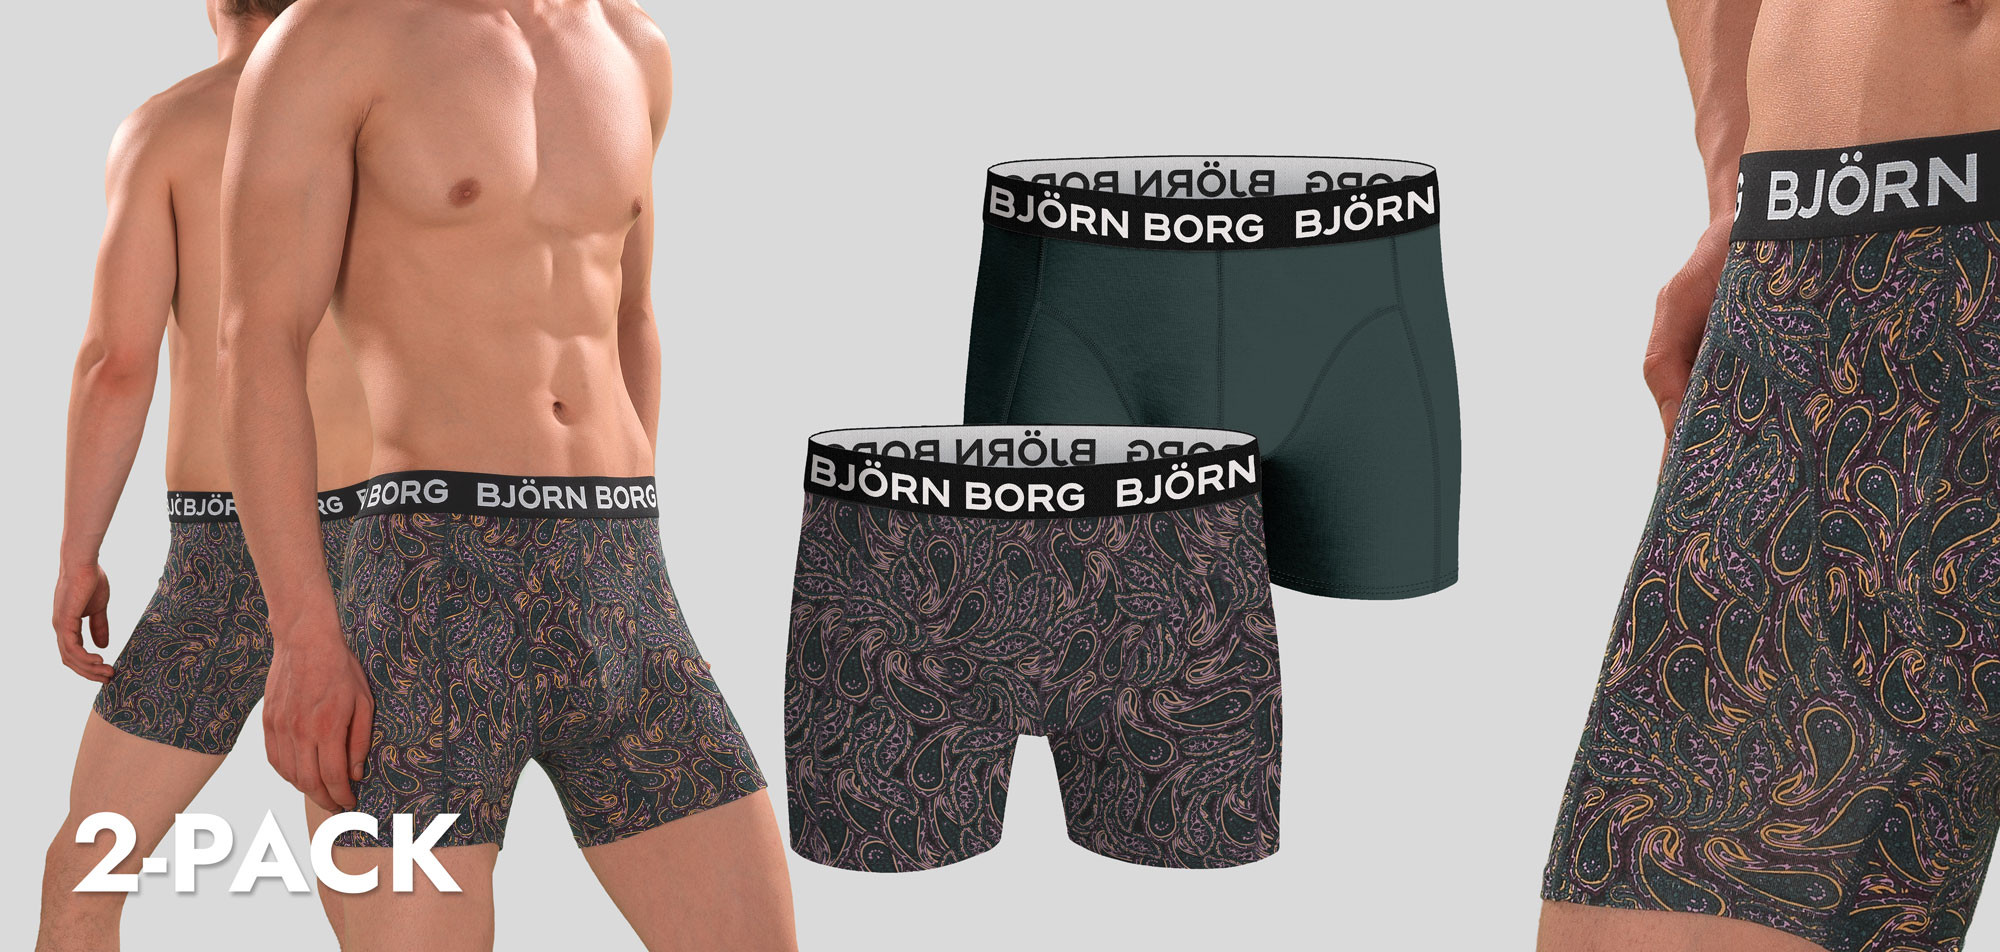 Bjorn Borg Boxershort 2-Pack 174 Bamboo,